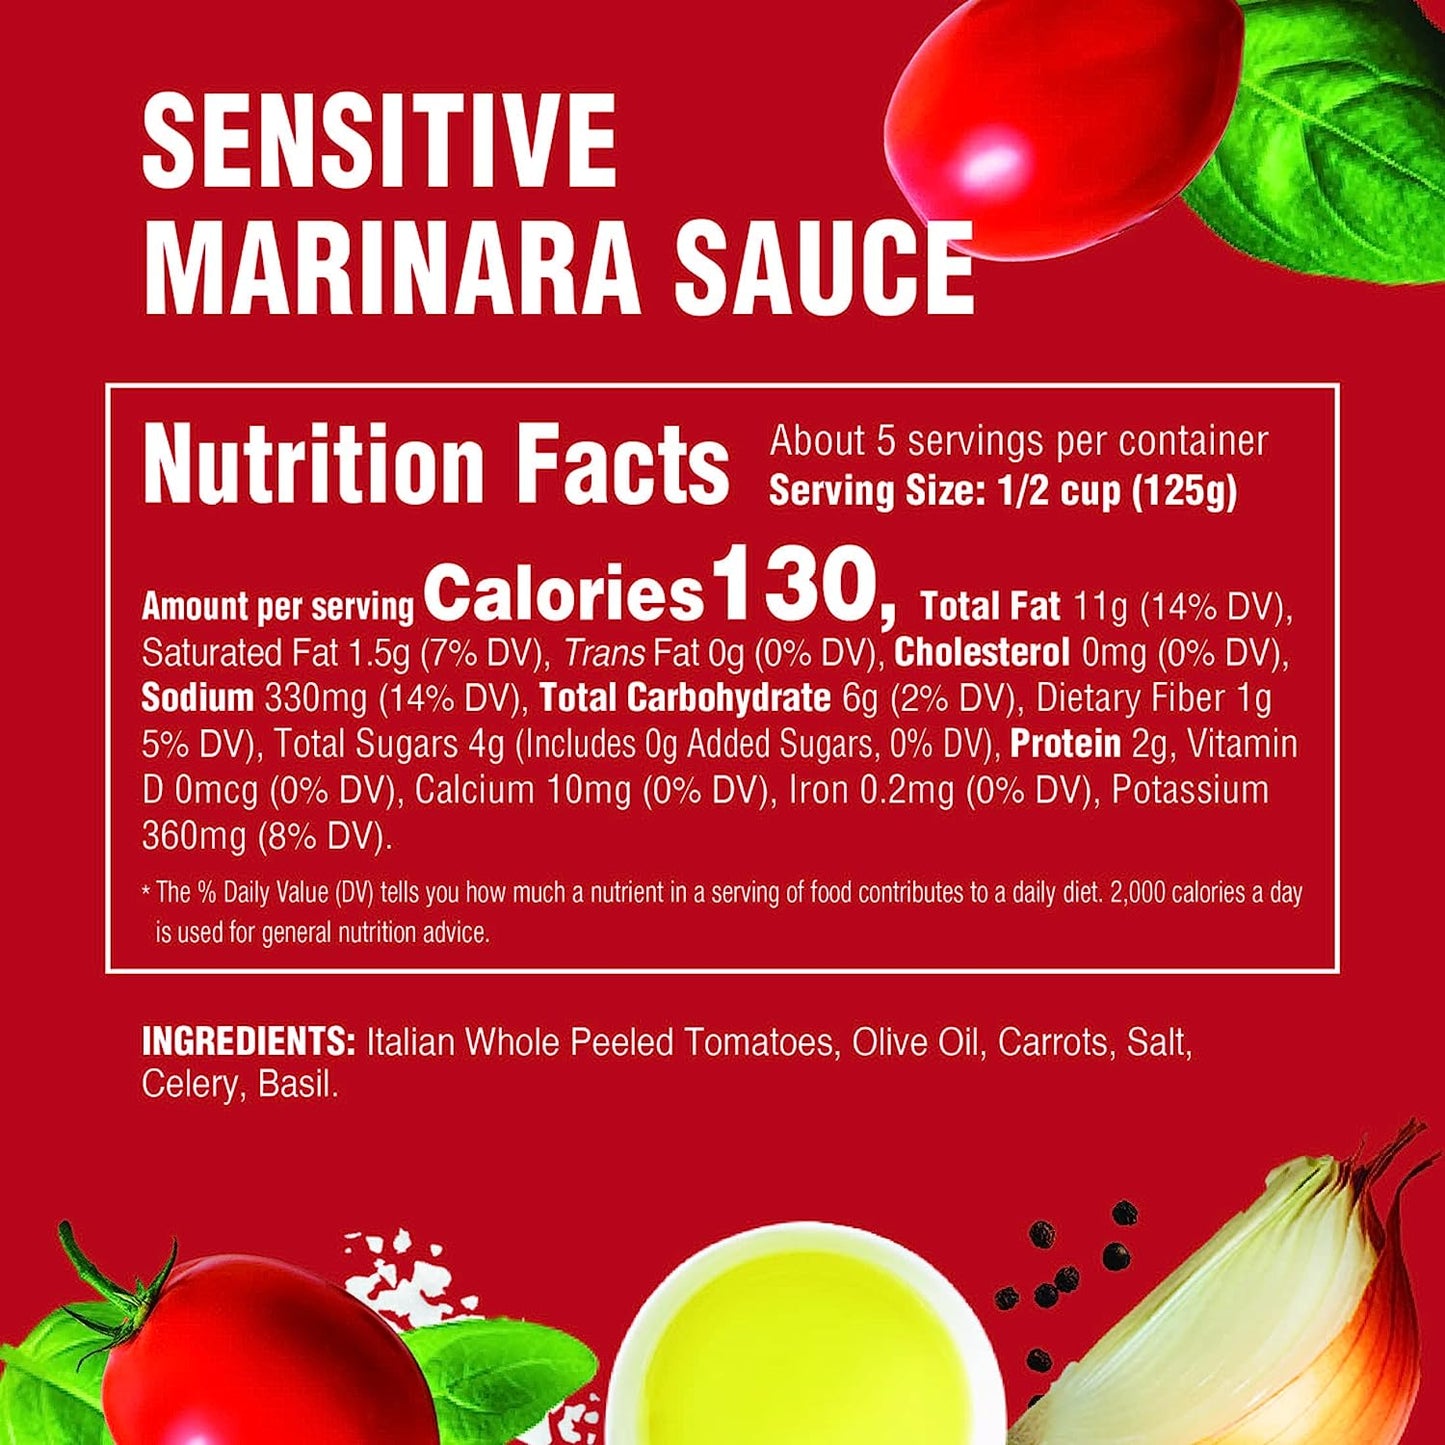 Rao's Sensitive Marinara Sauce (24 oz)